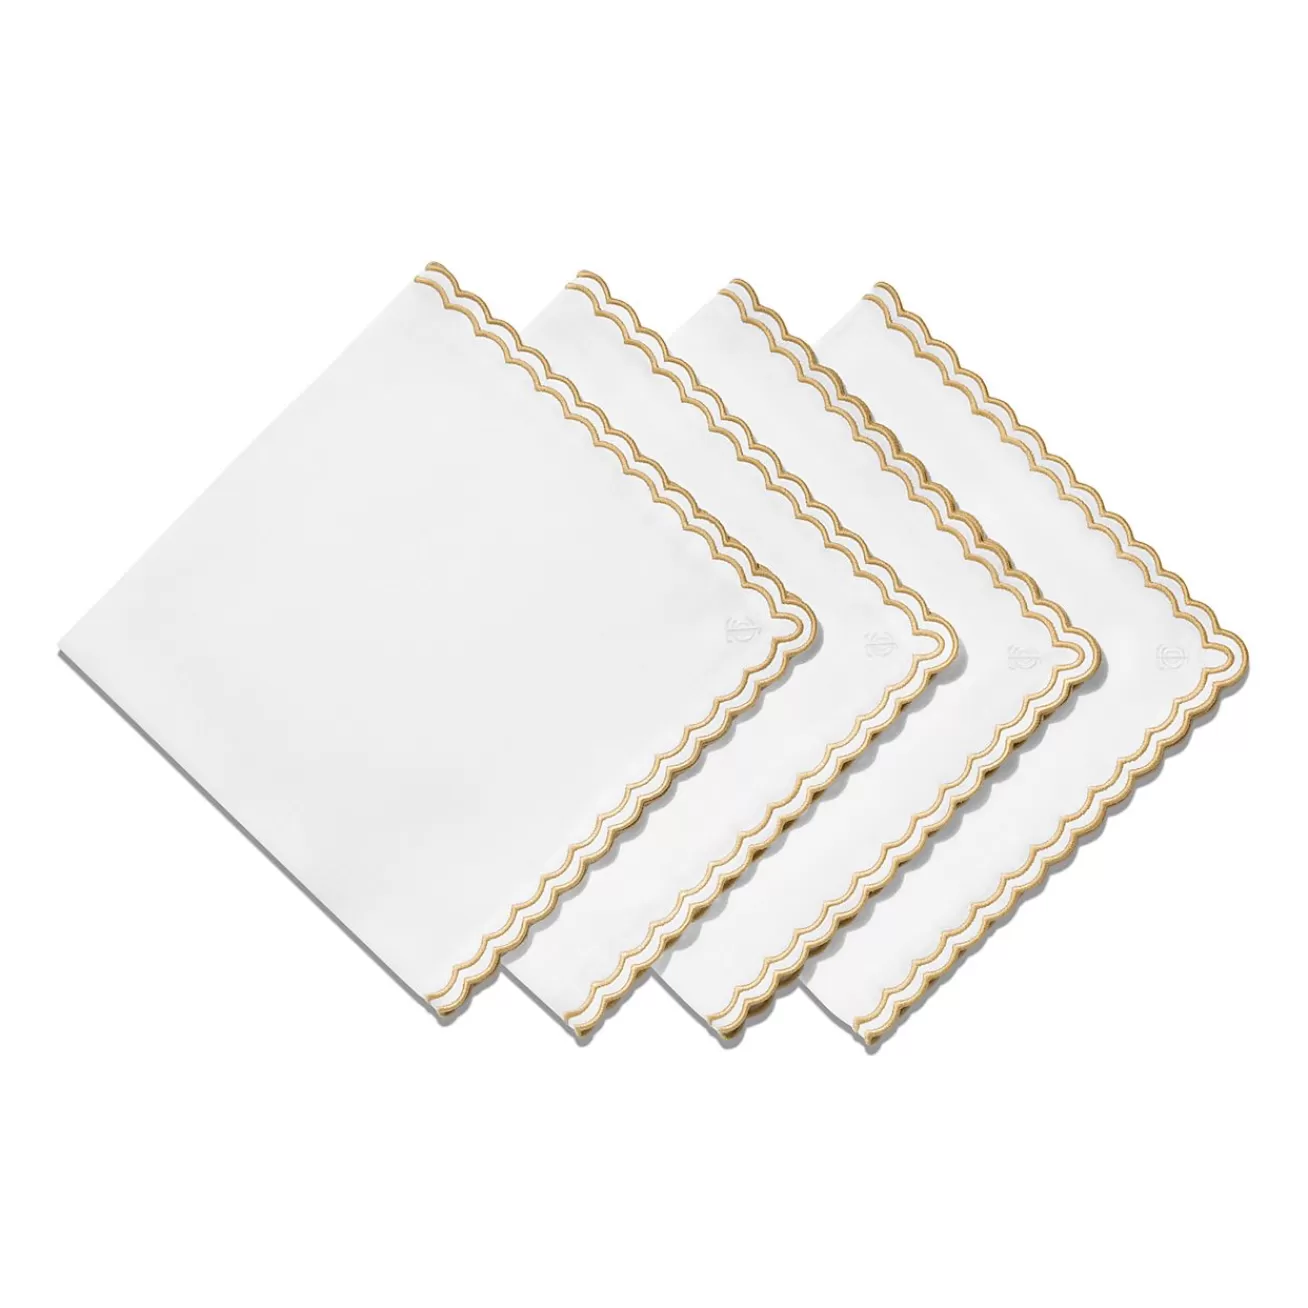 Tiffany & Co. Tiffany Home Essentials Scalloped Napkins in White Linen, Set of Four | ^ Decor | Table Linens